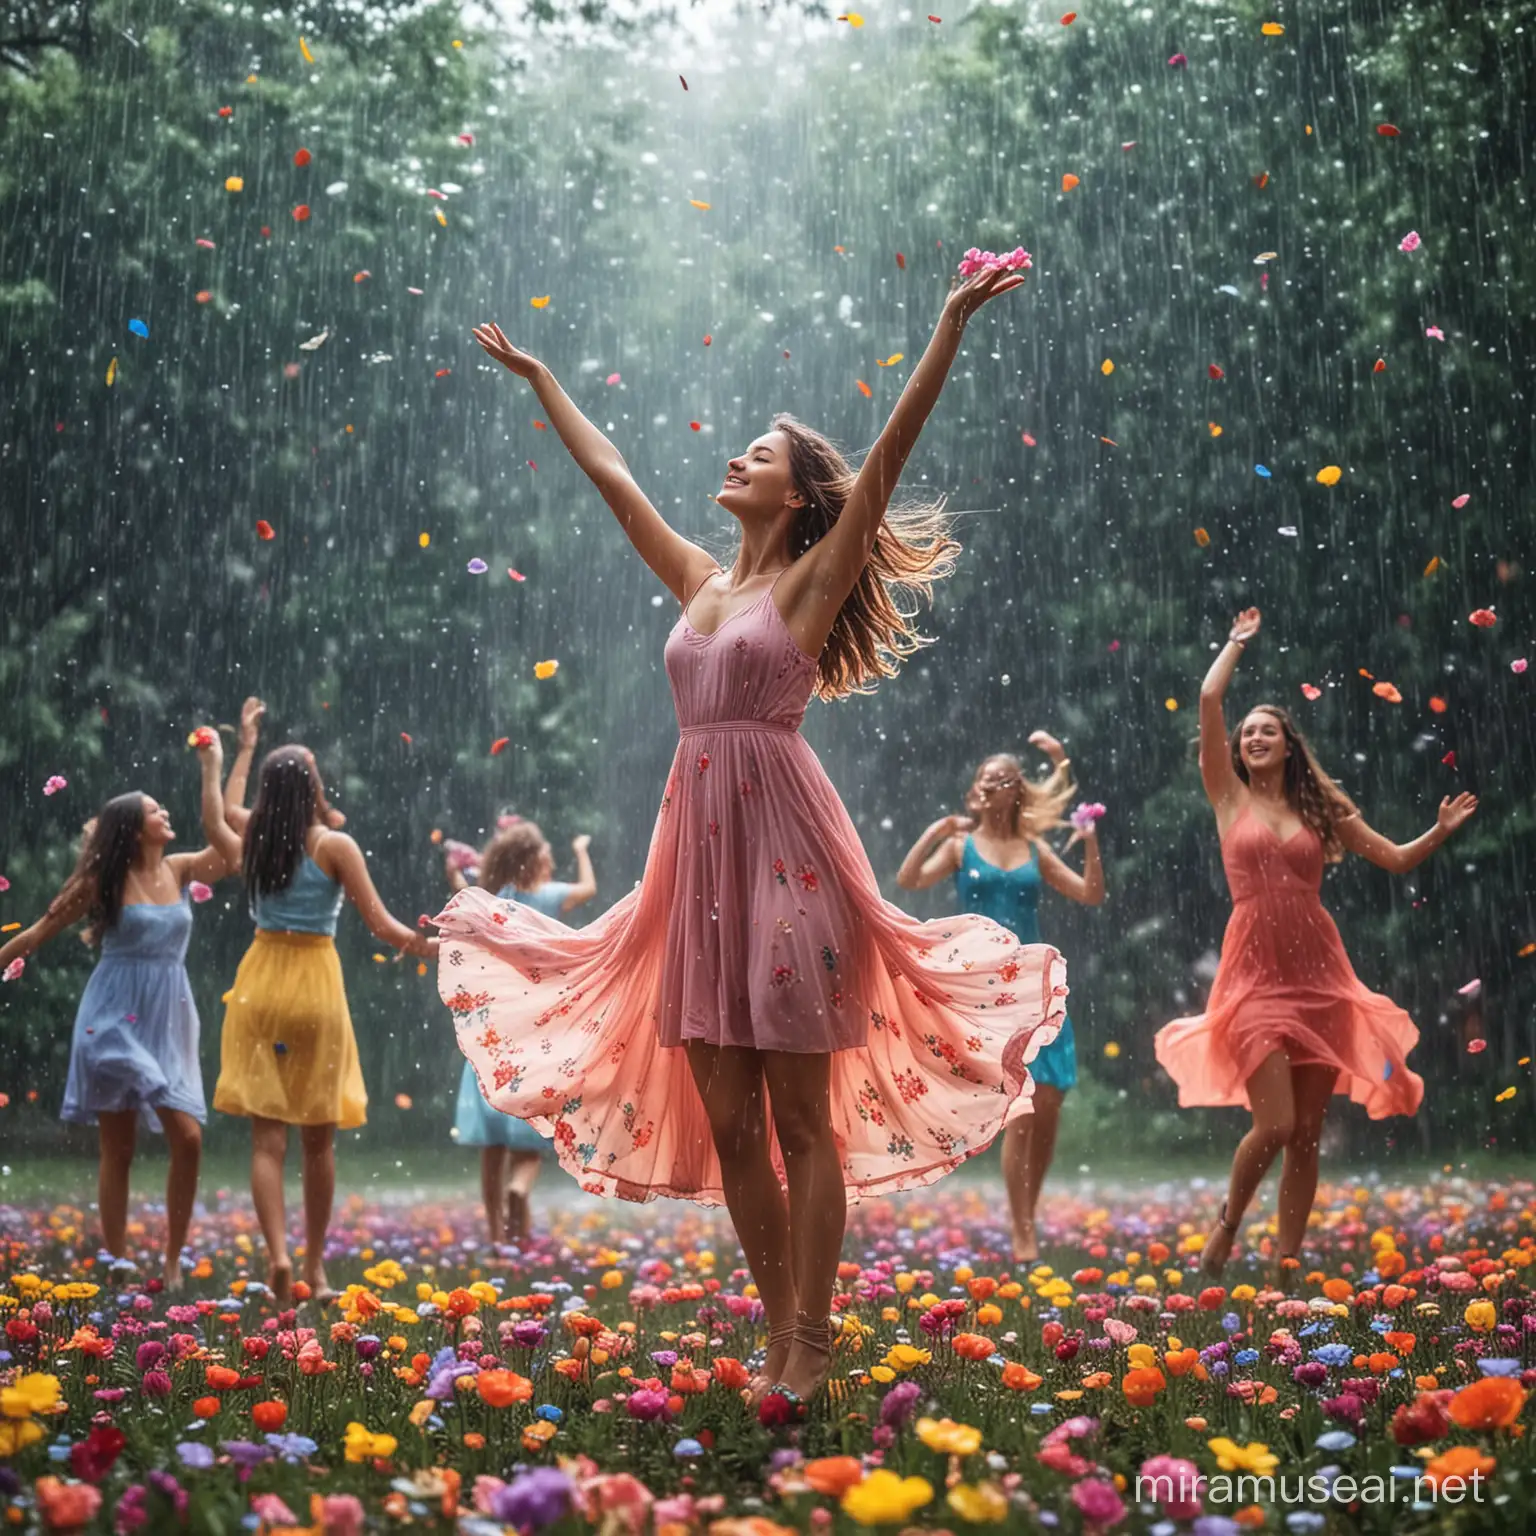 Vibrant Flower Rain Dance Joyful Girls Amidst Colorful Shower